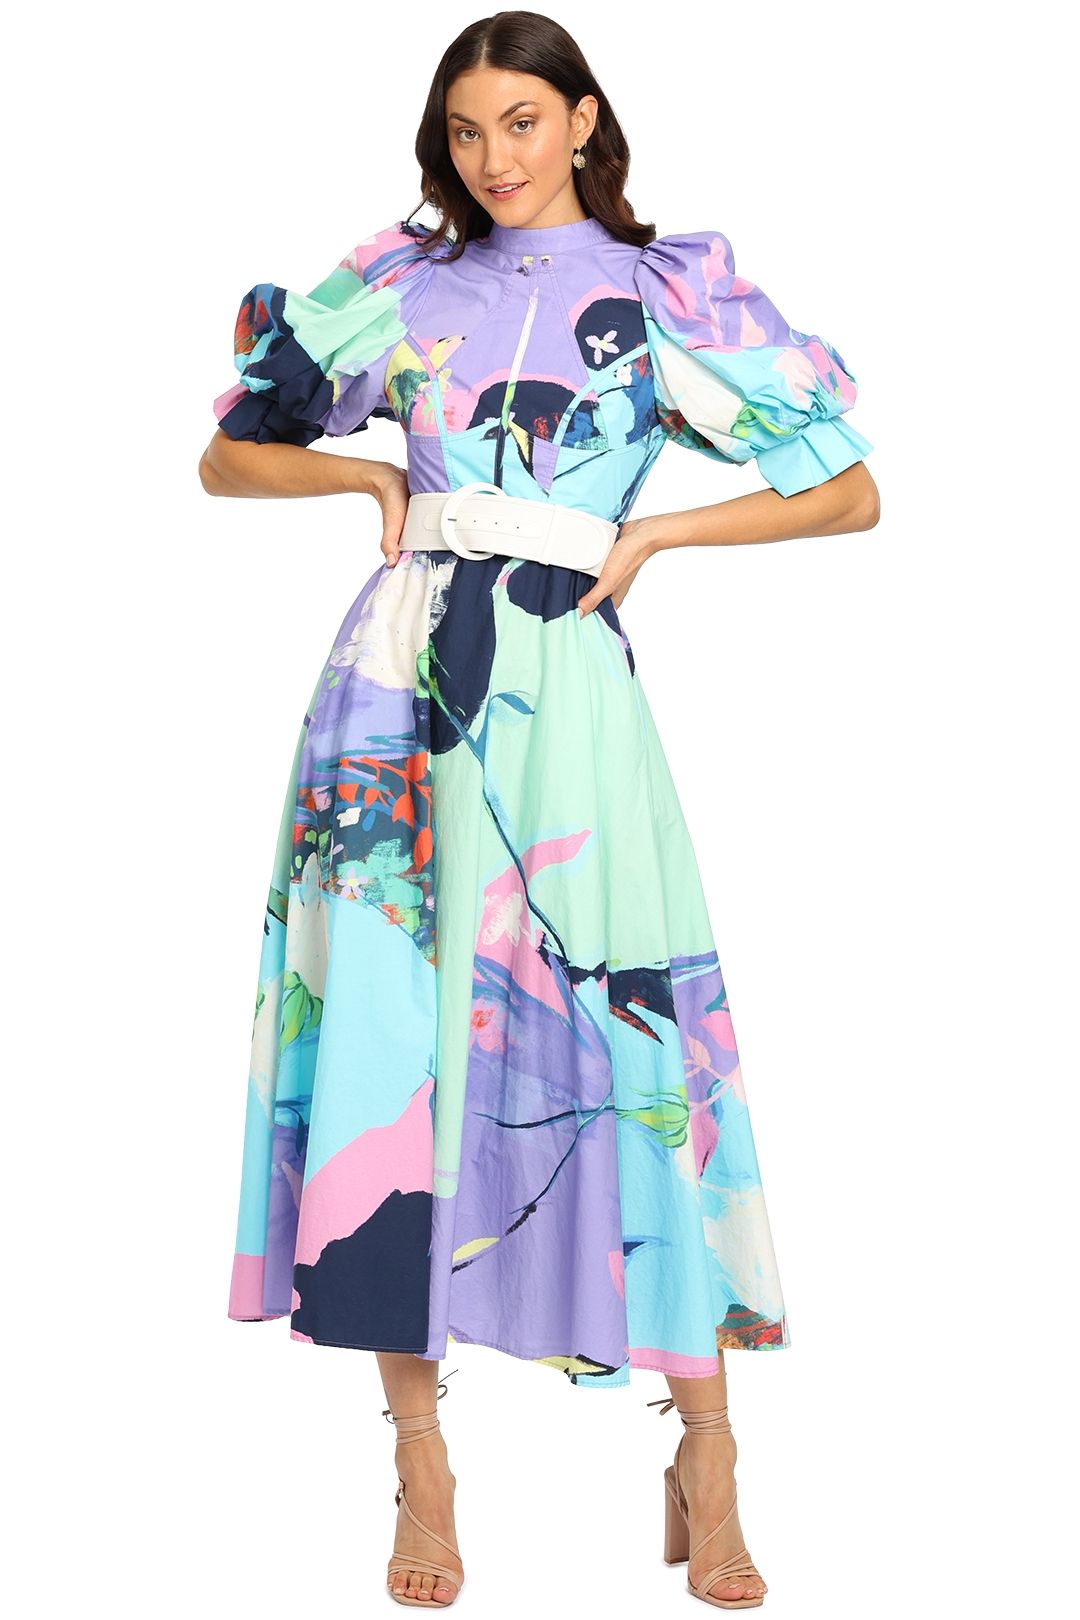 LEO LIN - Illusory Cotton Dress